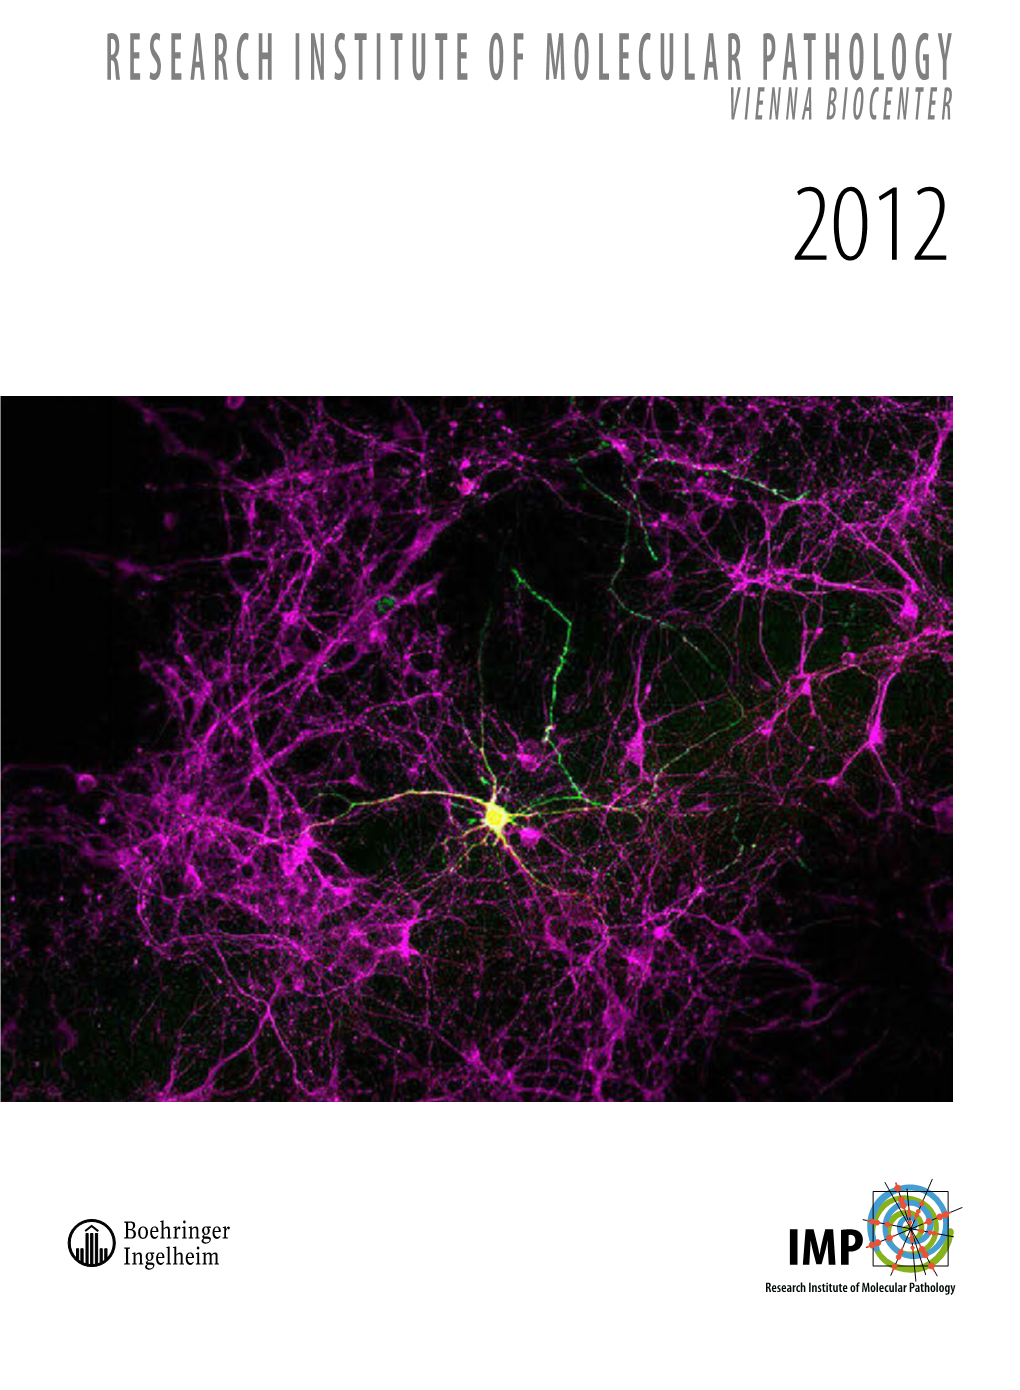 2012 IMP Research Report